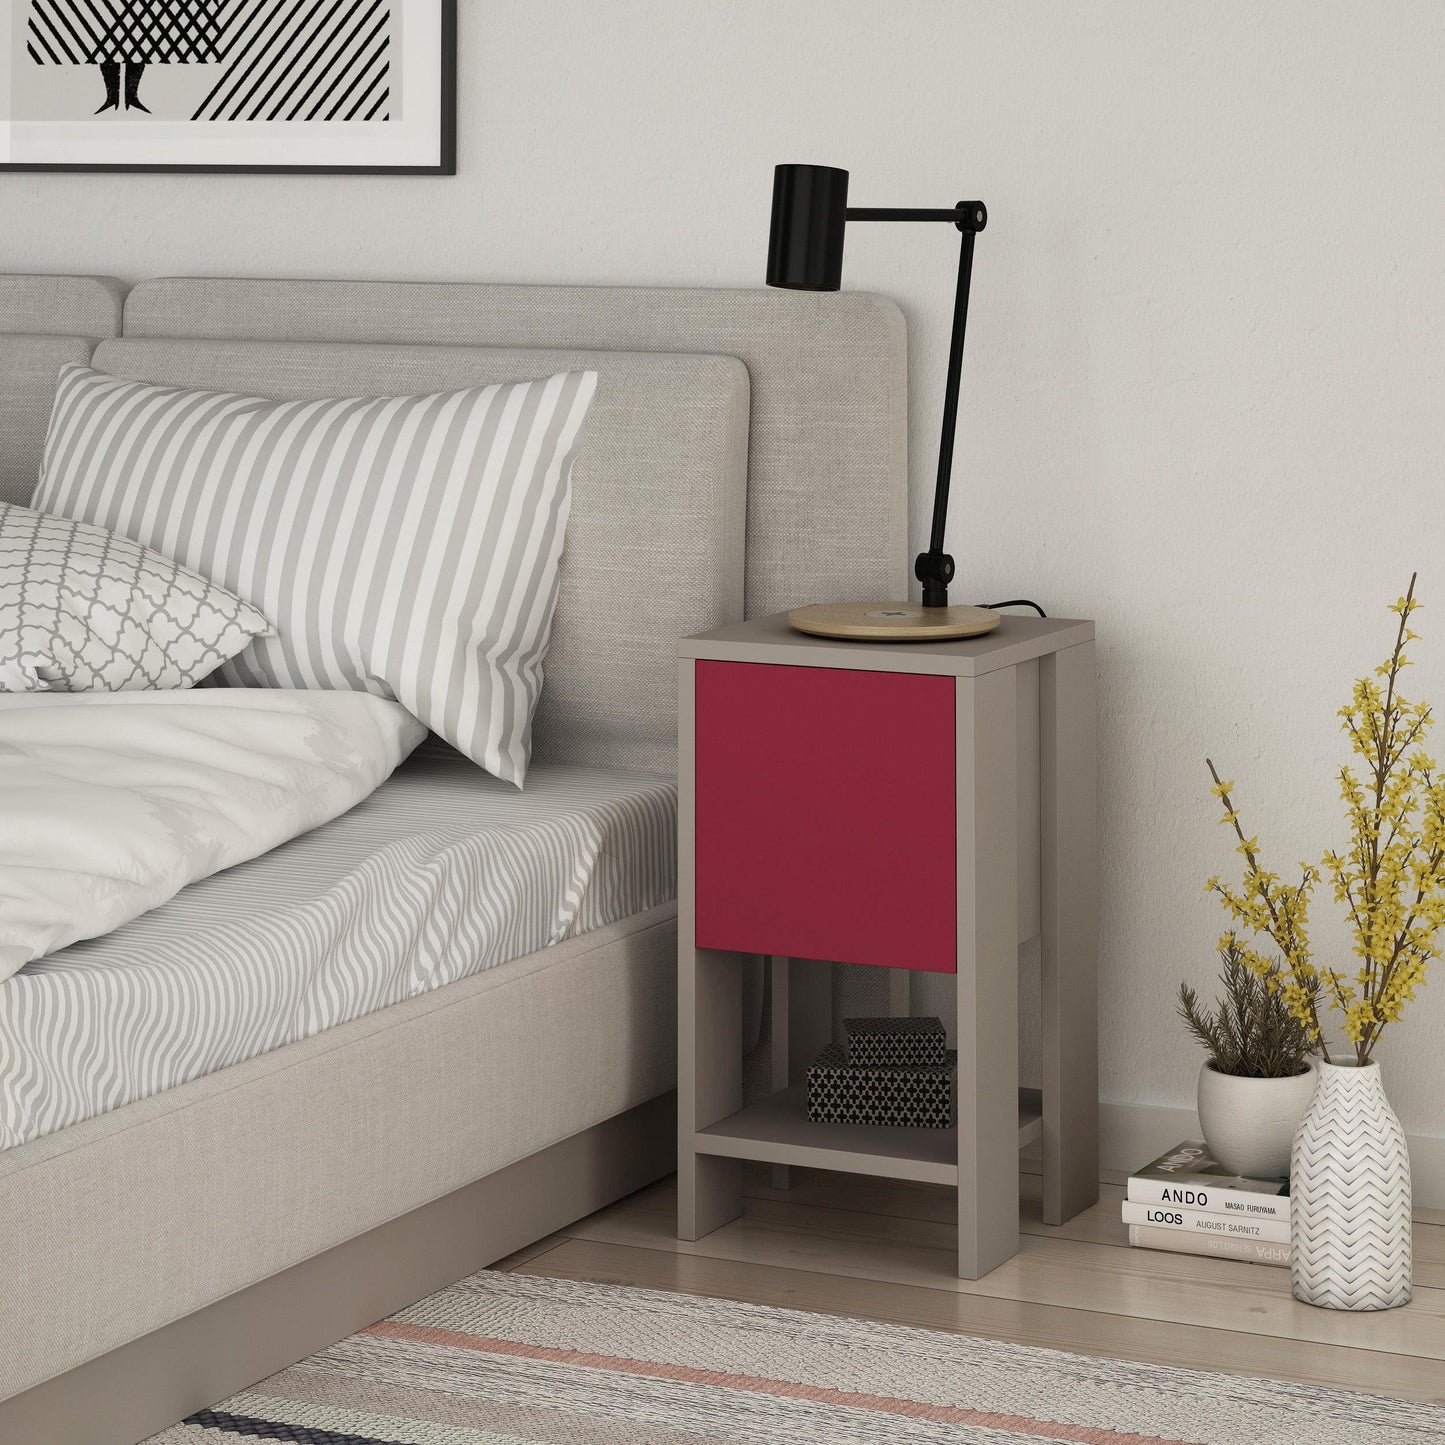 Ema Modern Bedside Table Width Bedroom Furniture 30cm - Decortie